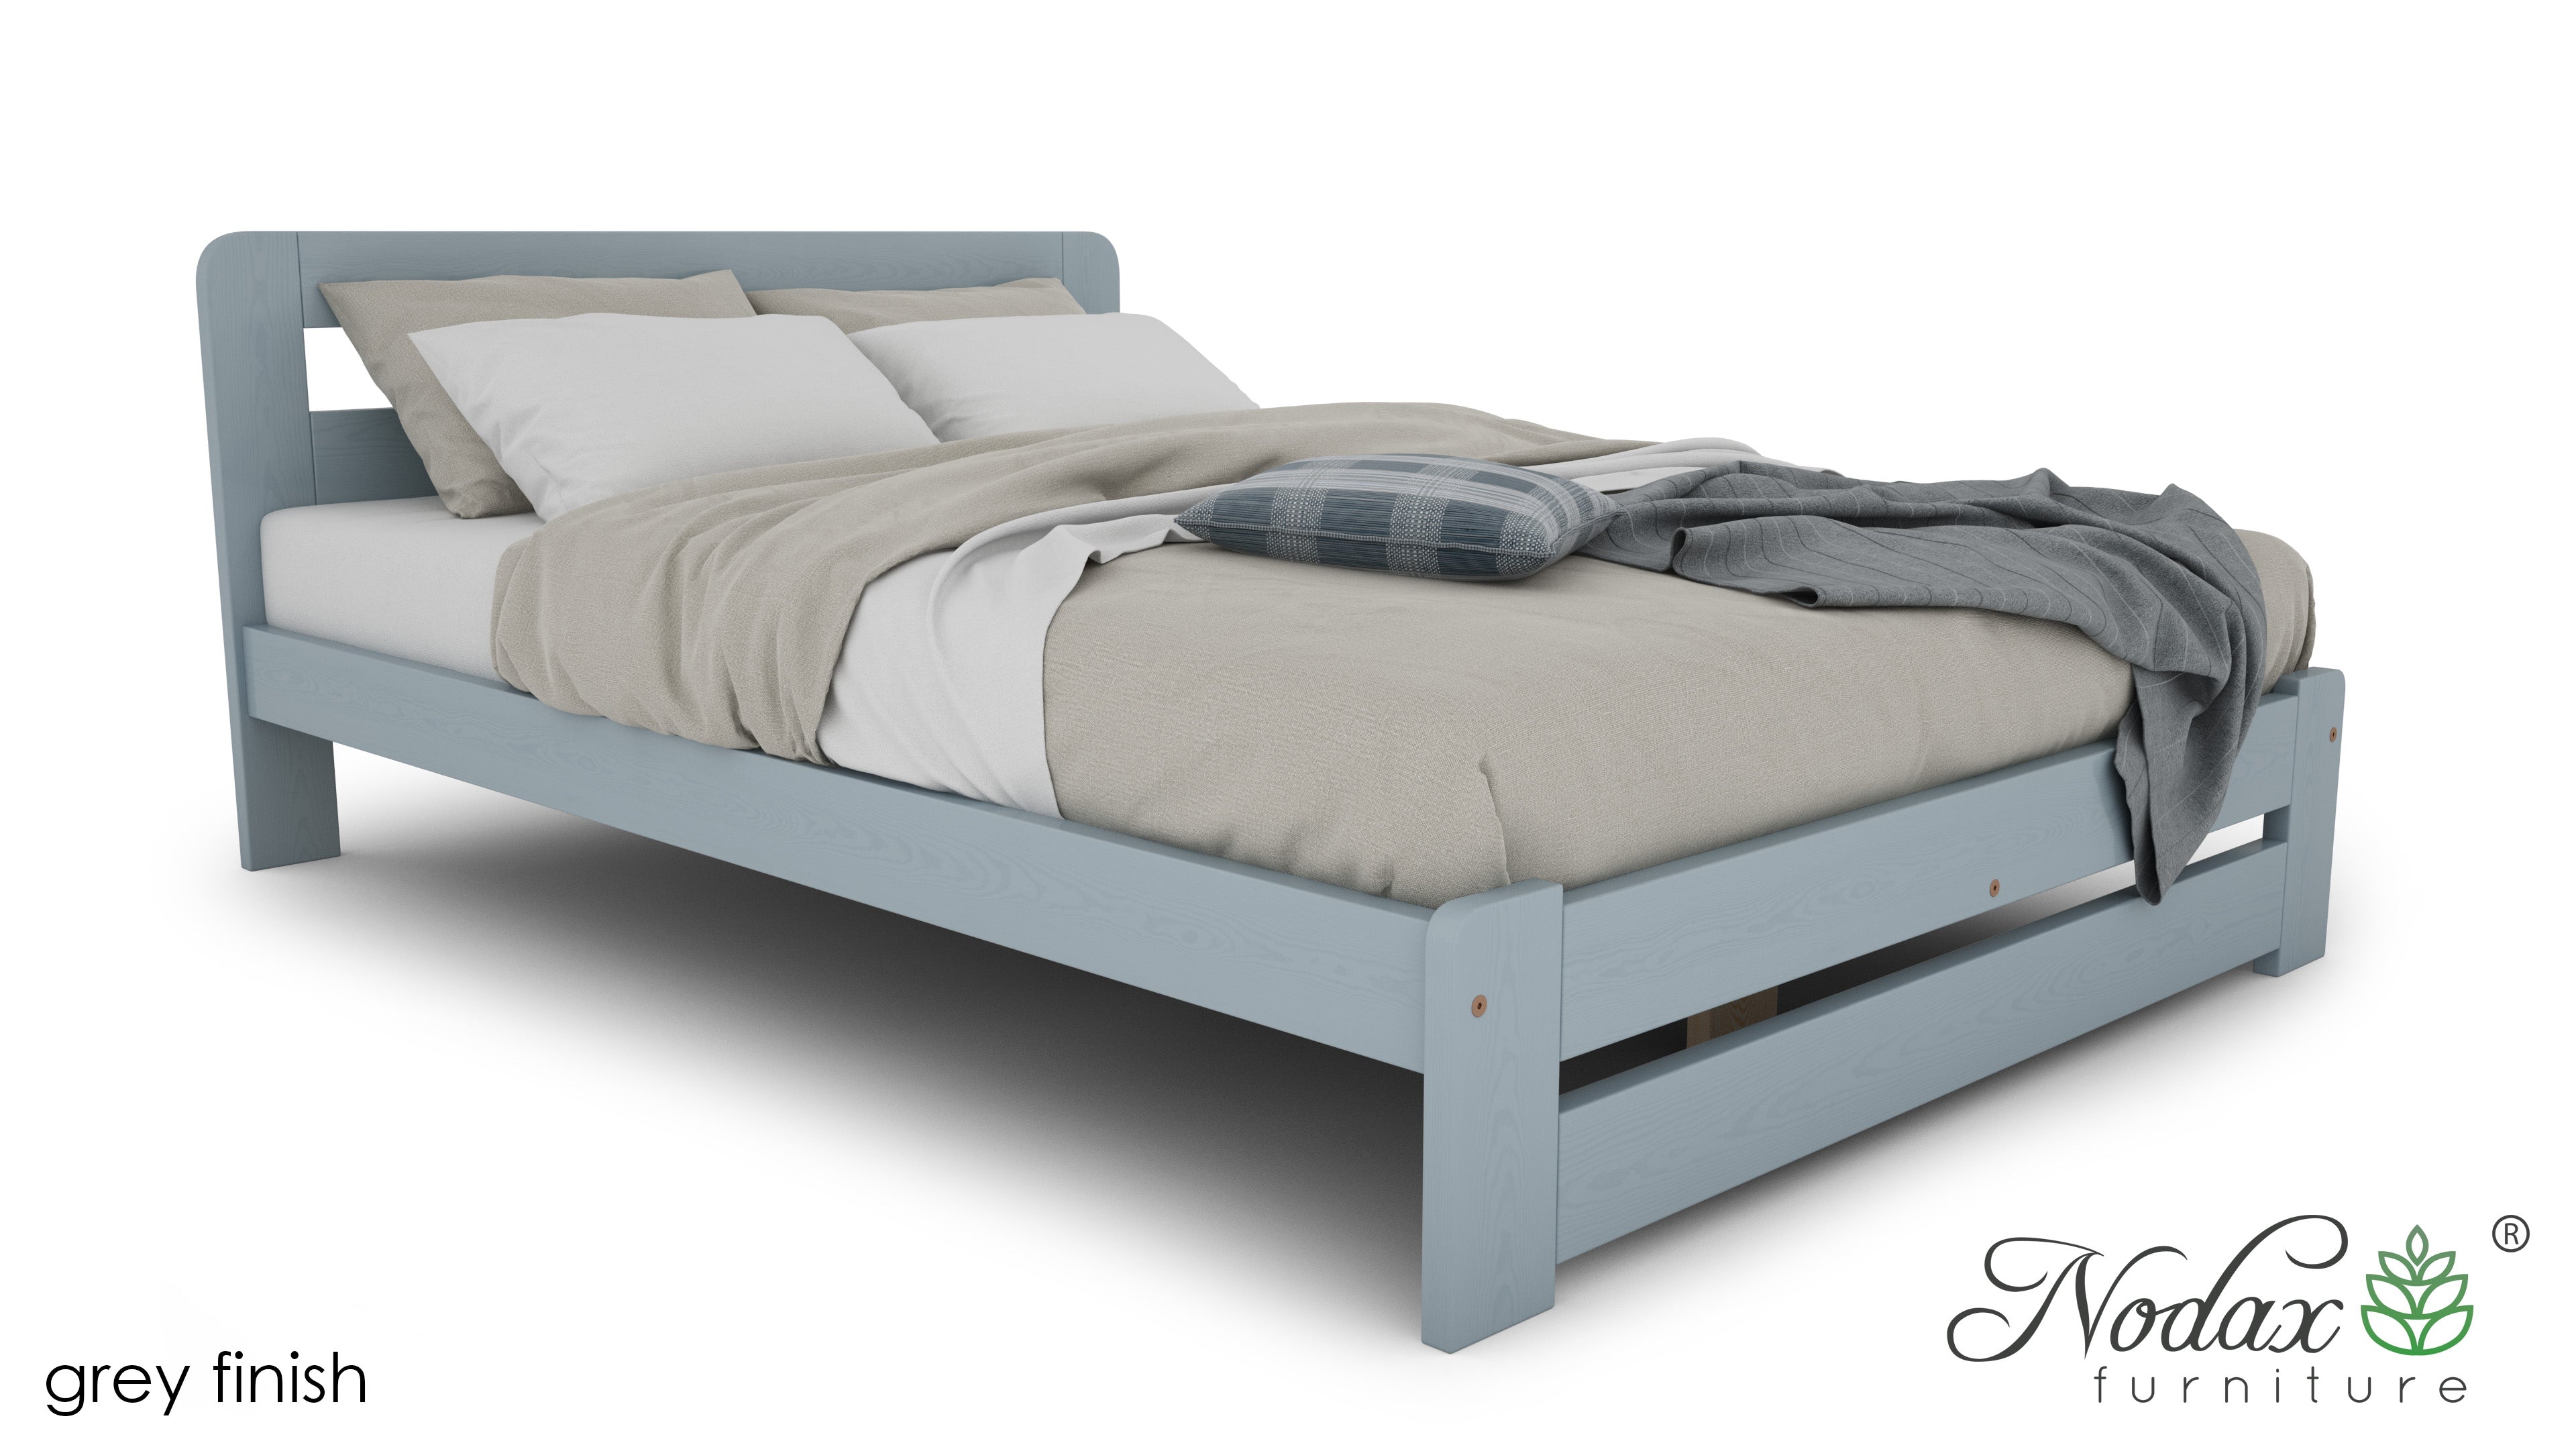 Wooden-bed-frame-Aurora-beds-online-grey